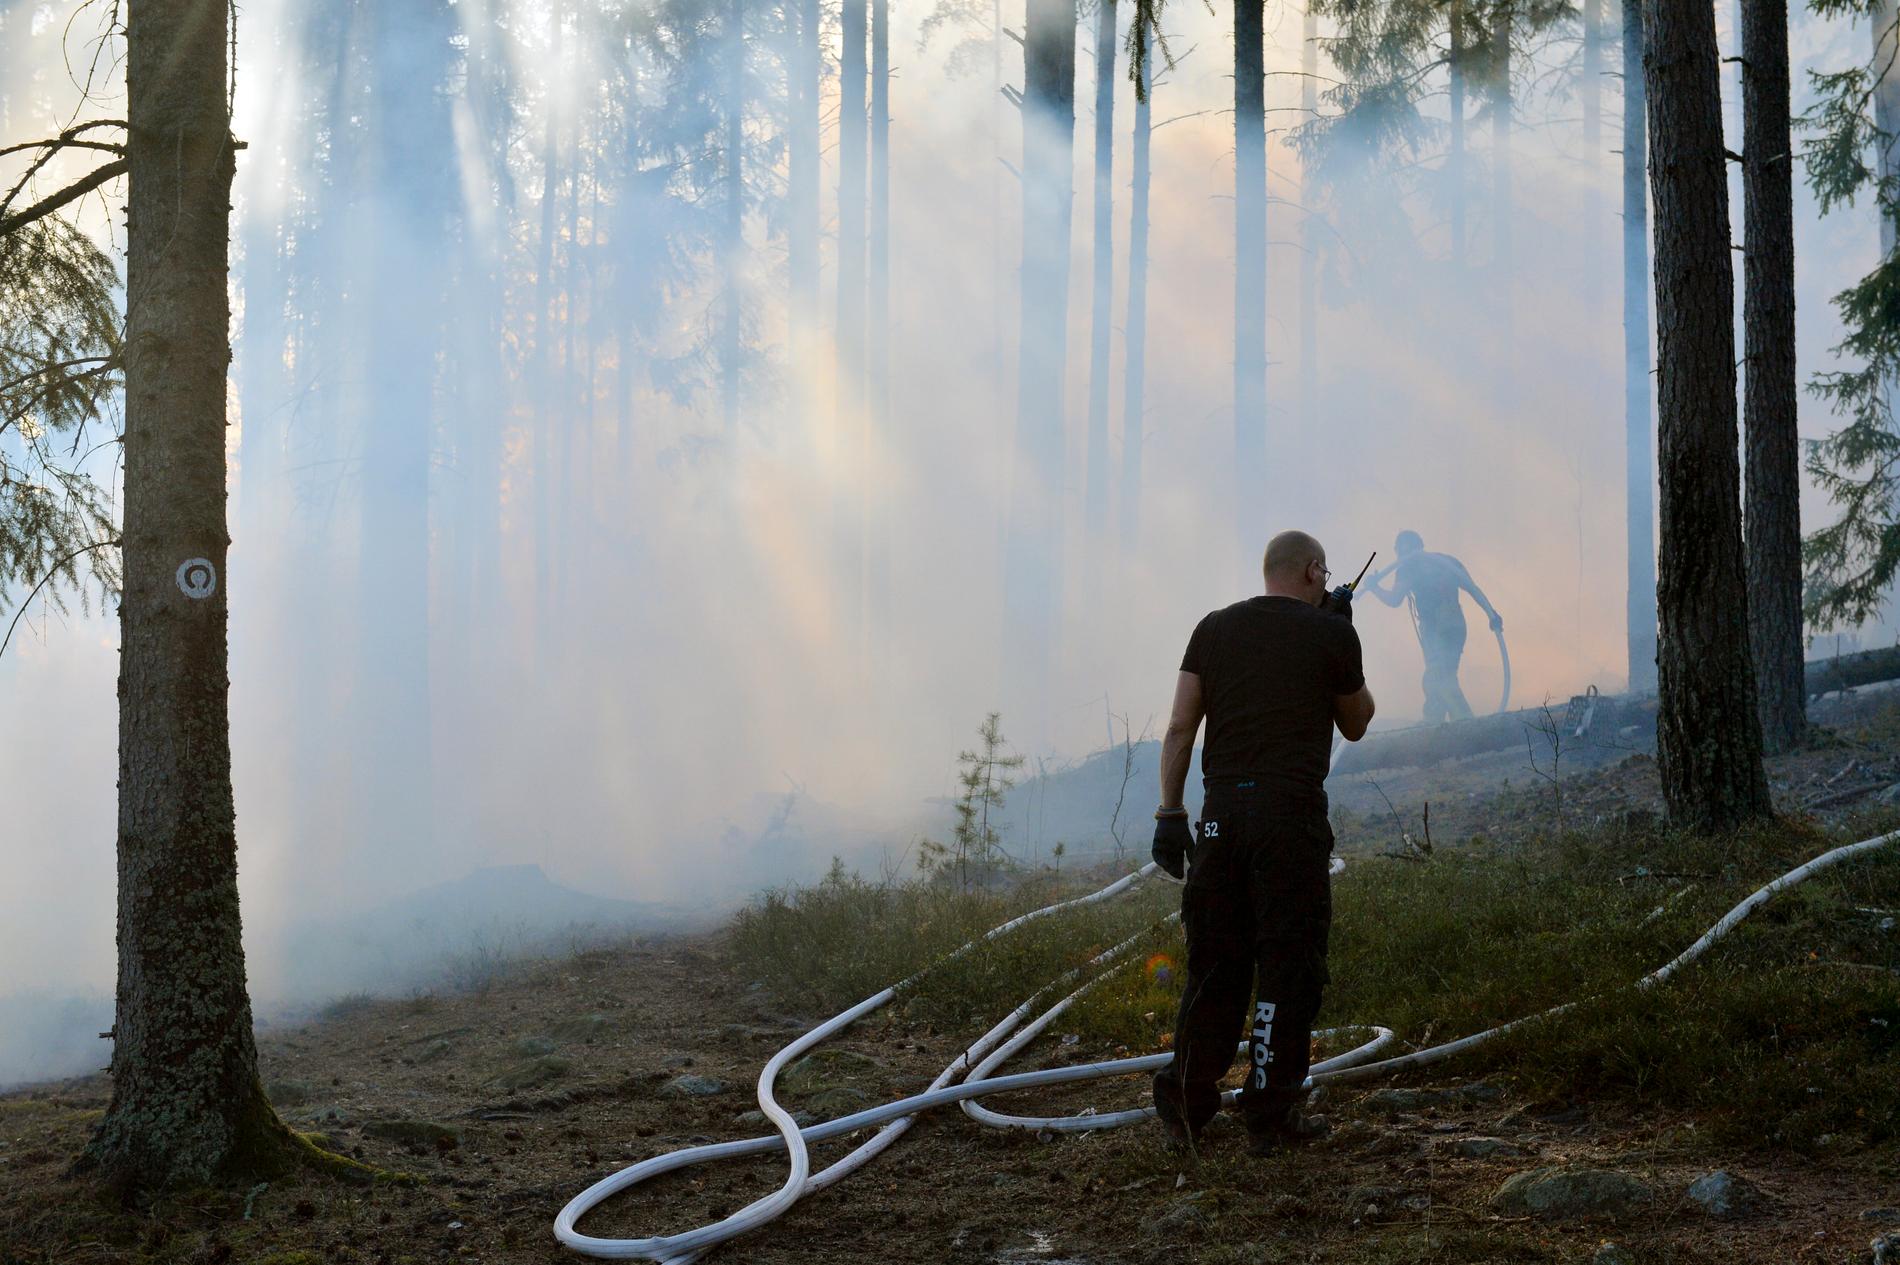 Skogsbranden i närheten av sjukhuset i Norrköping.